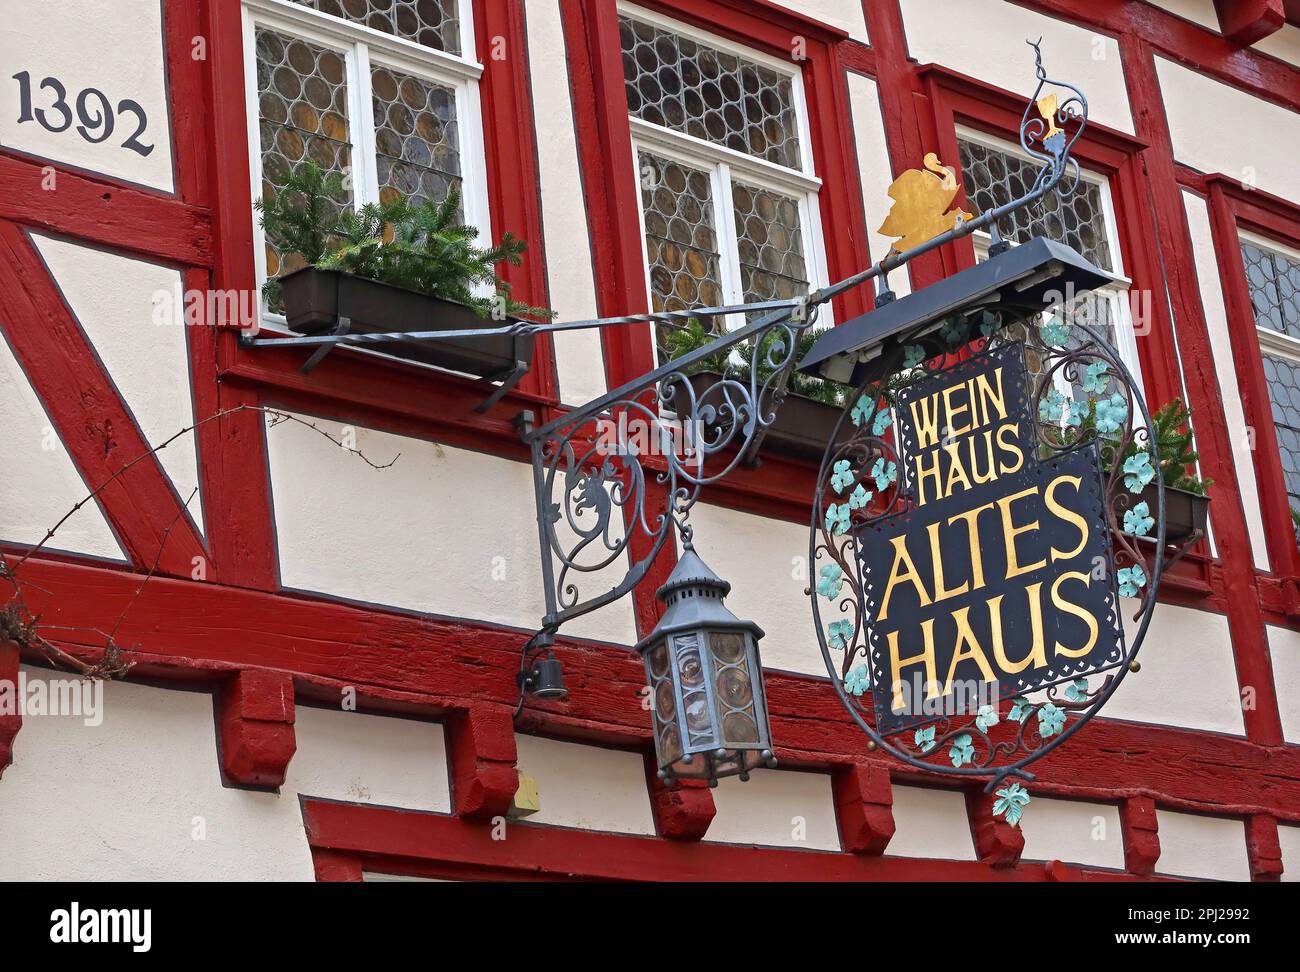 Wein Haus Altes Haus - 1392, Bacharach (Bacharach am Rhein),  Mainz-Bingen district, Germany Stock Photo